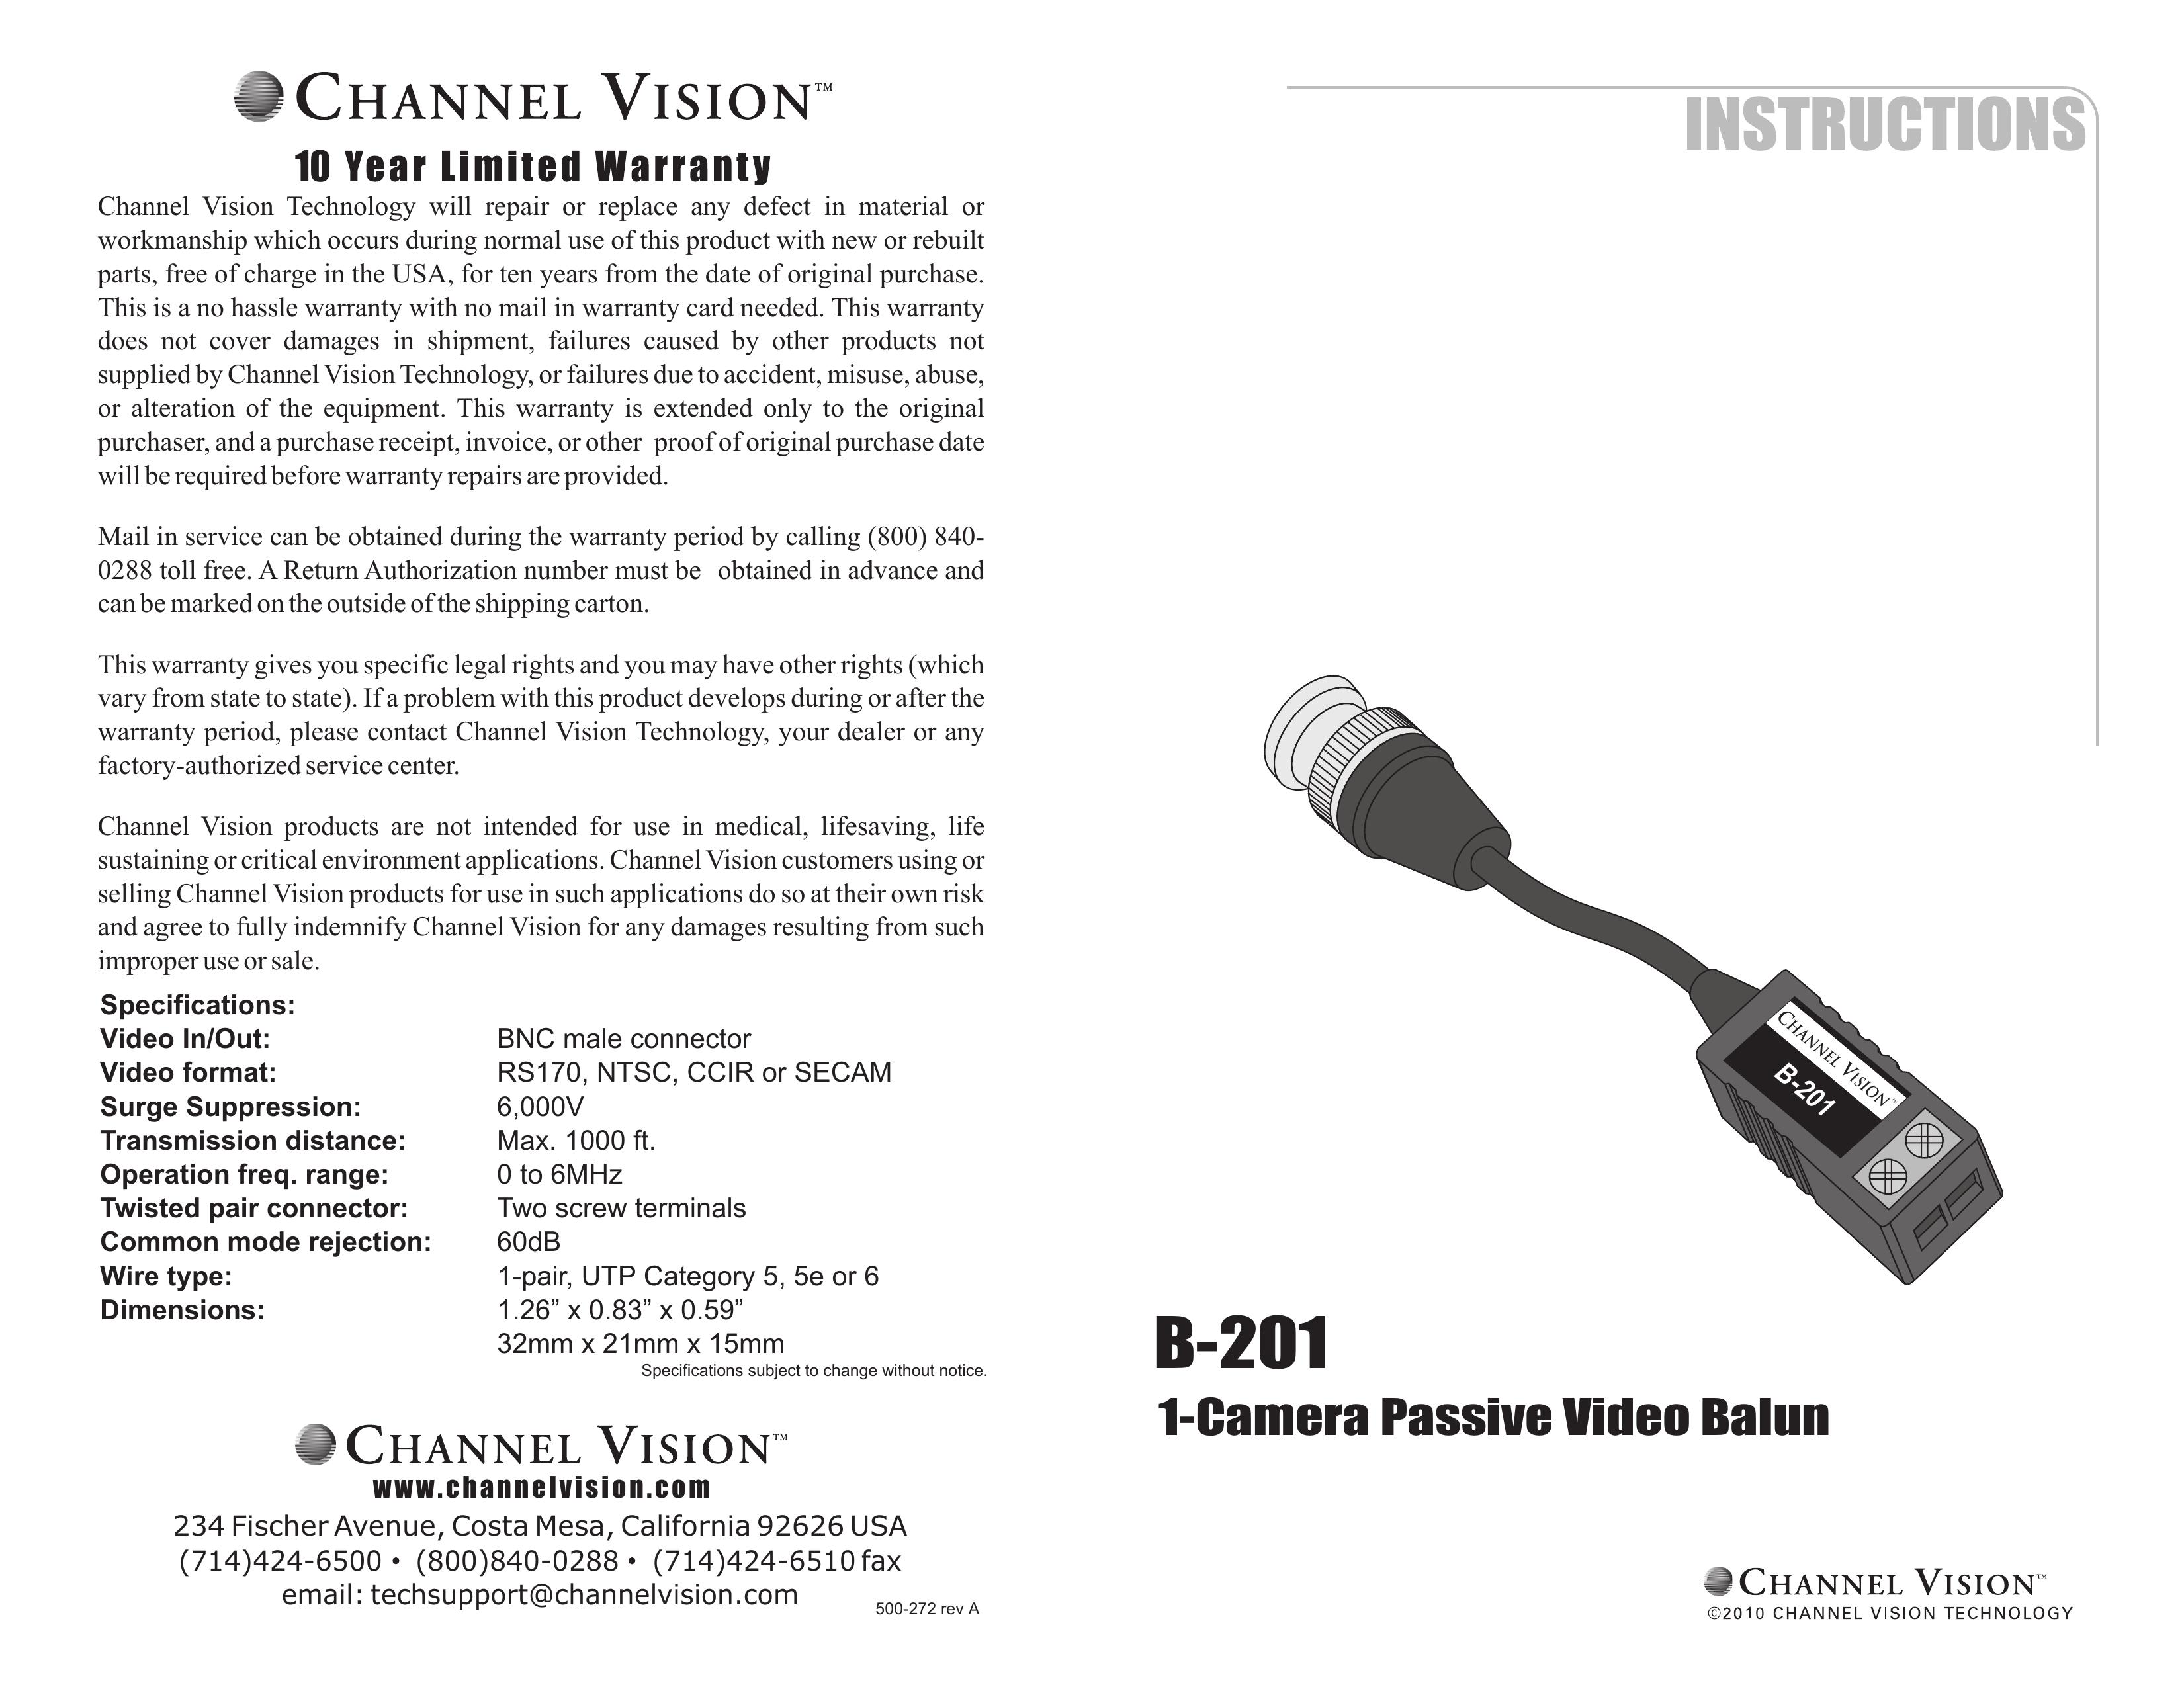 Channel Vision B-201 Camera Accessories User Manual